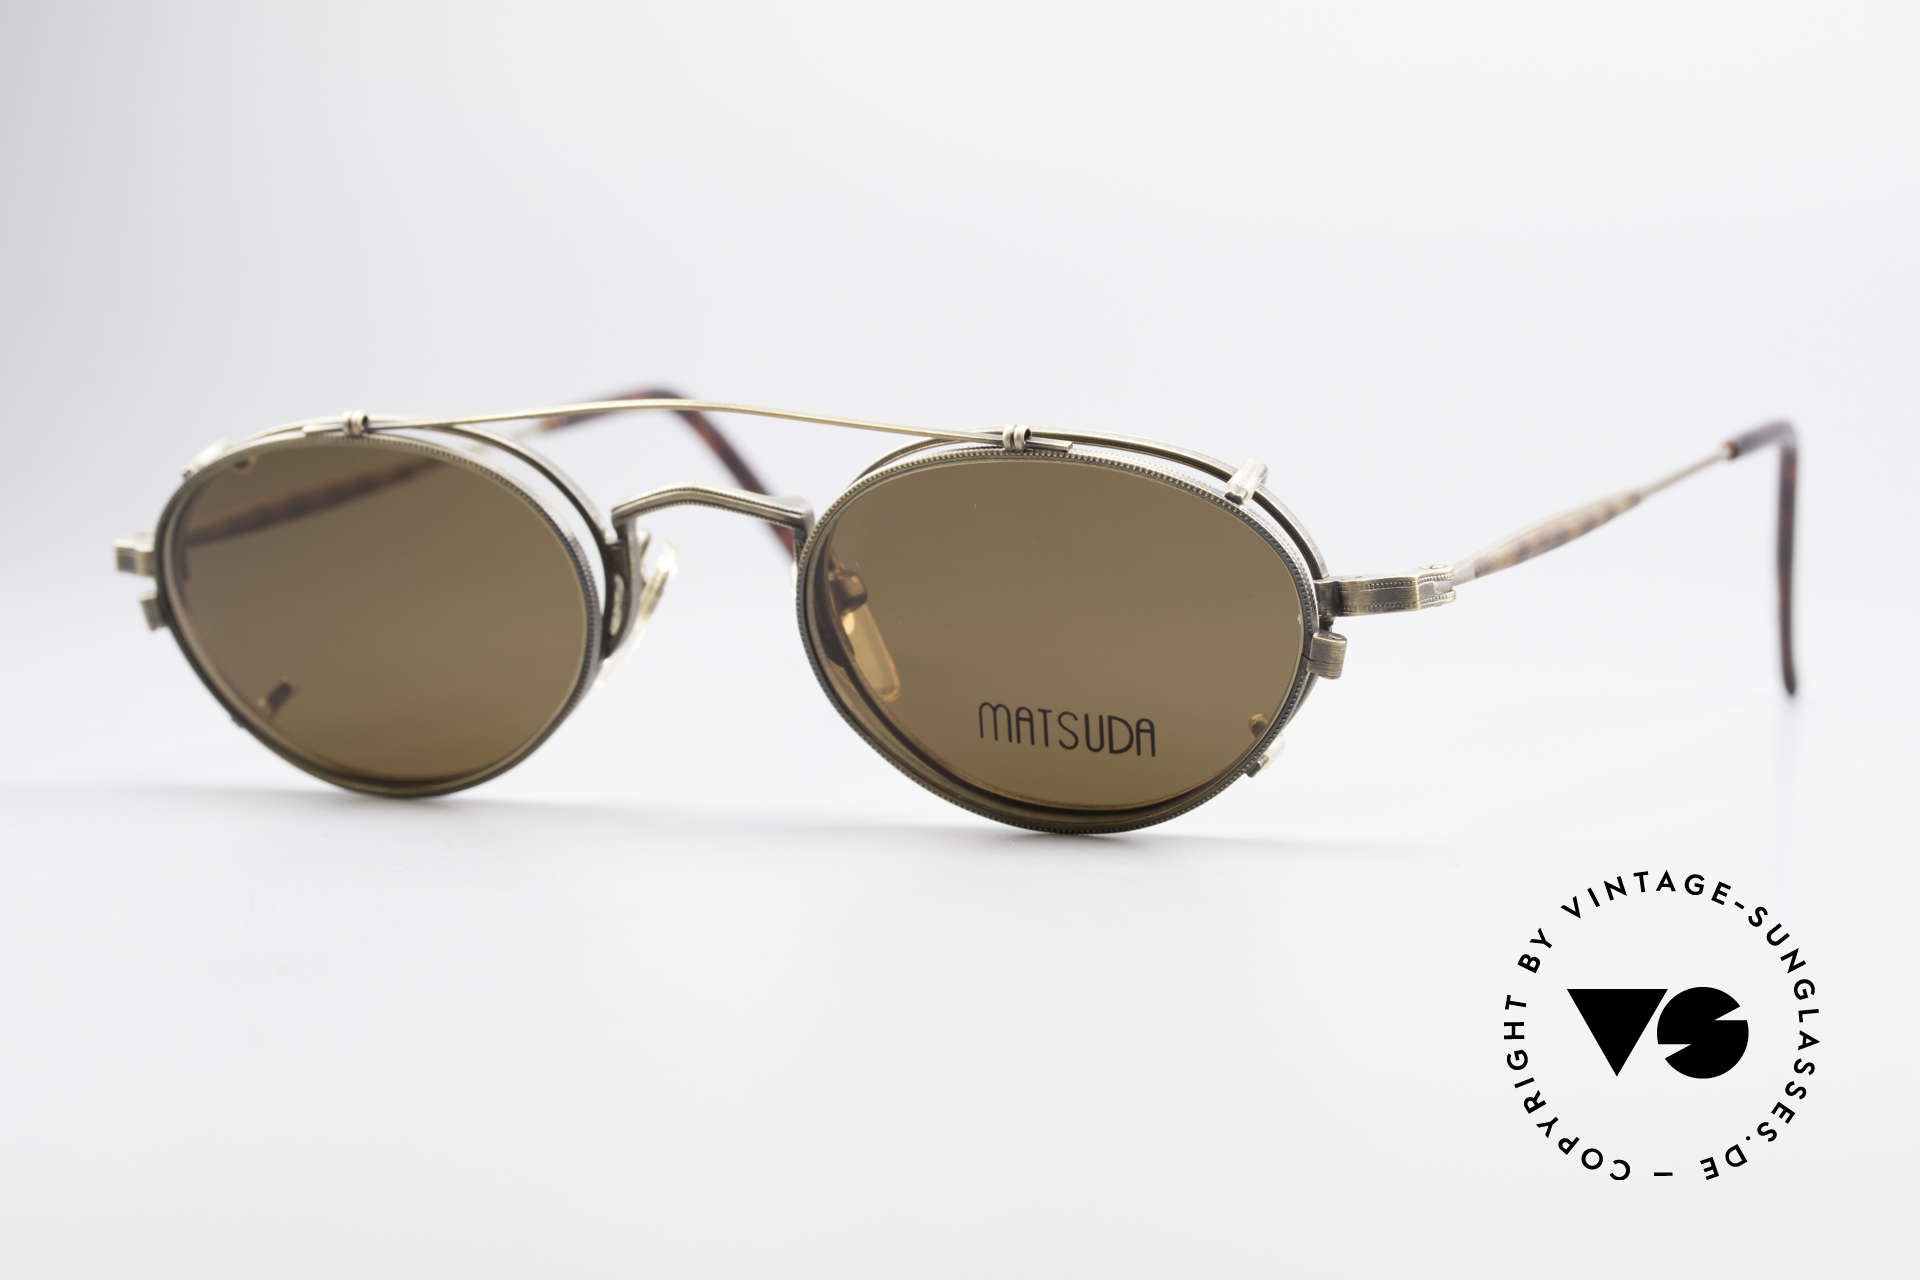 Matsuda 10102 Vintage Steampunk Shades, vintage Matsuda designer eyeglasses from the mid 90's, Made for Men